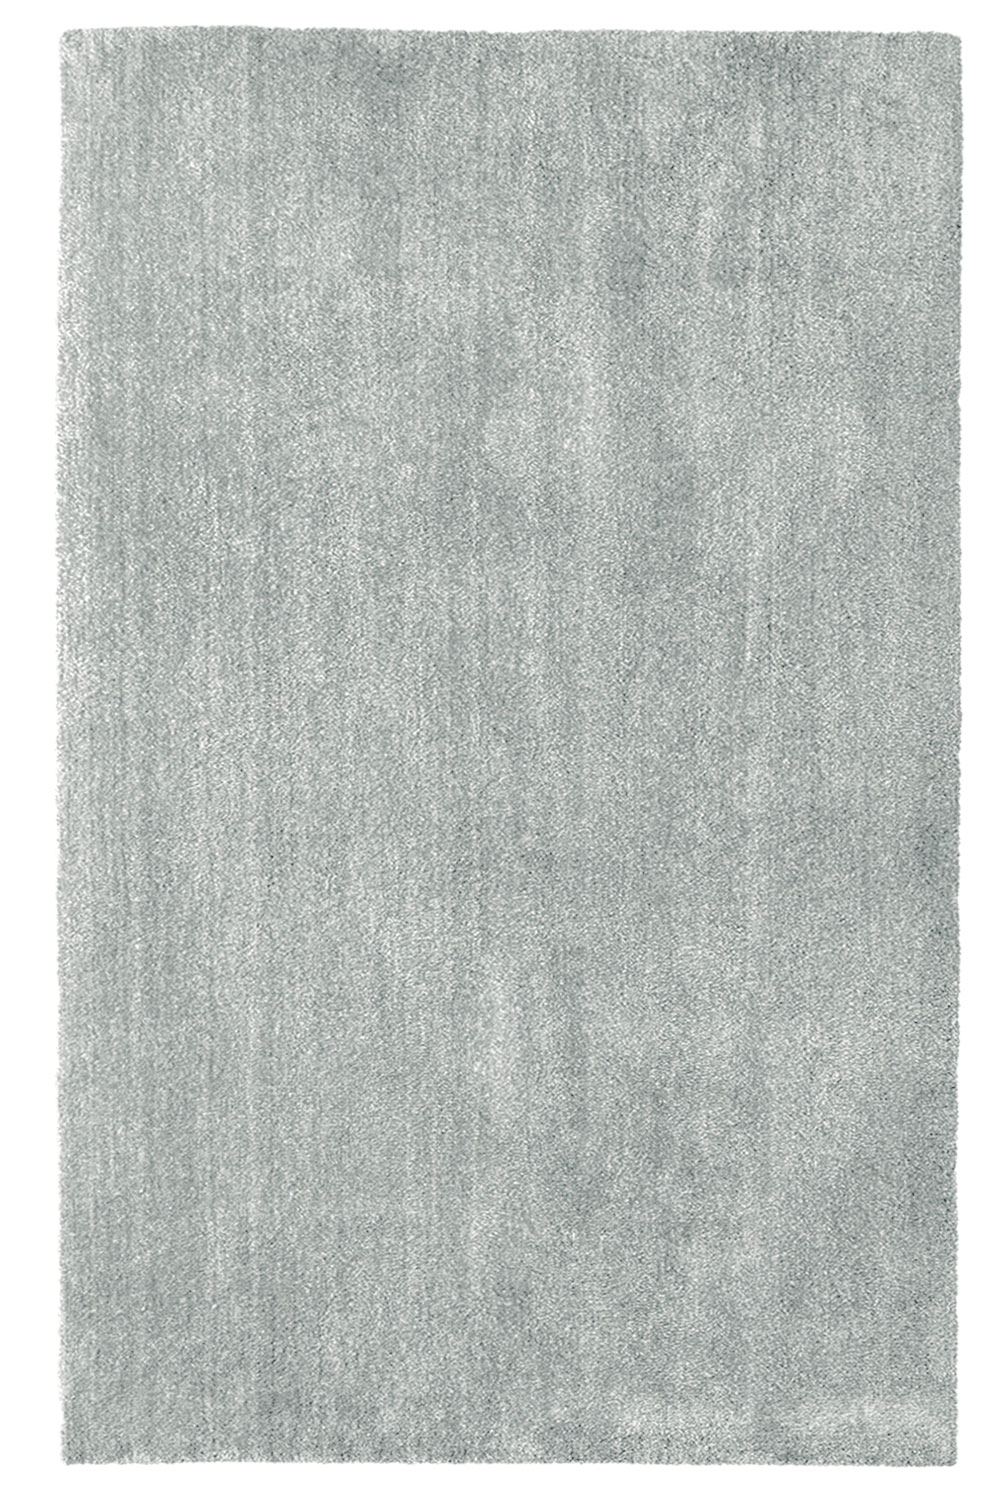 Kusový koberec Labrador 71351 060 L.Grey 120x170 cm